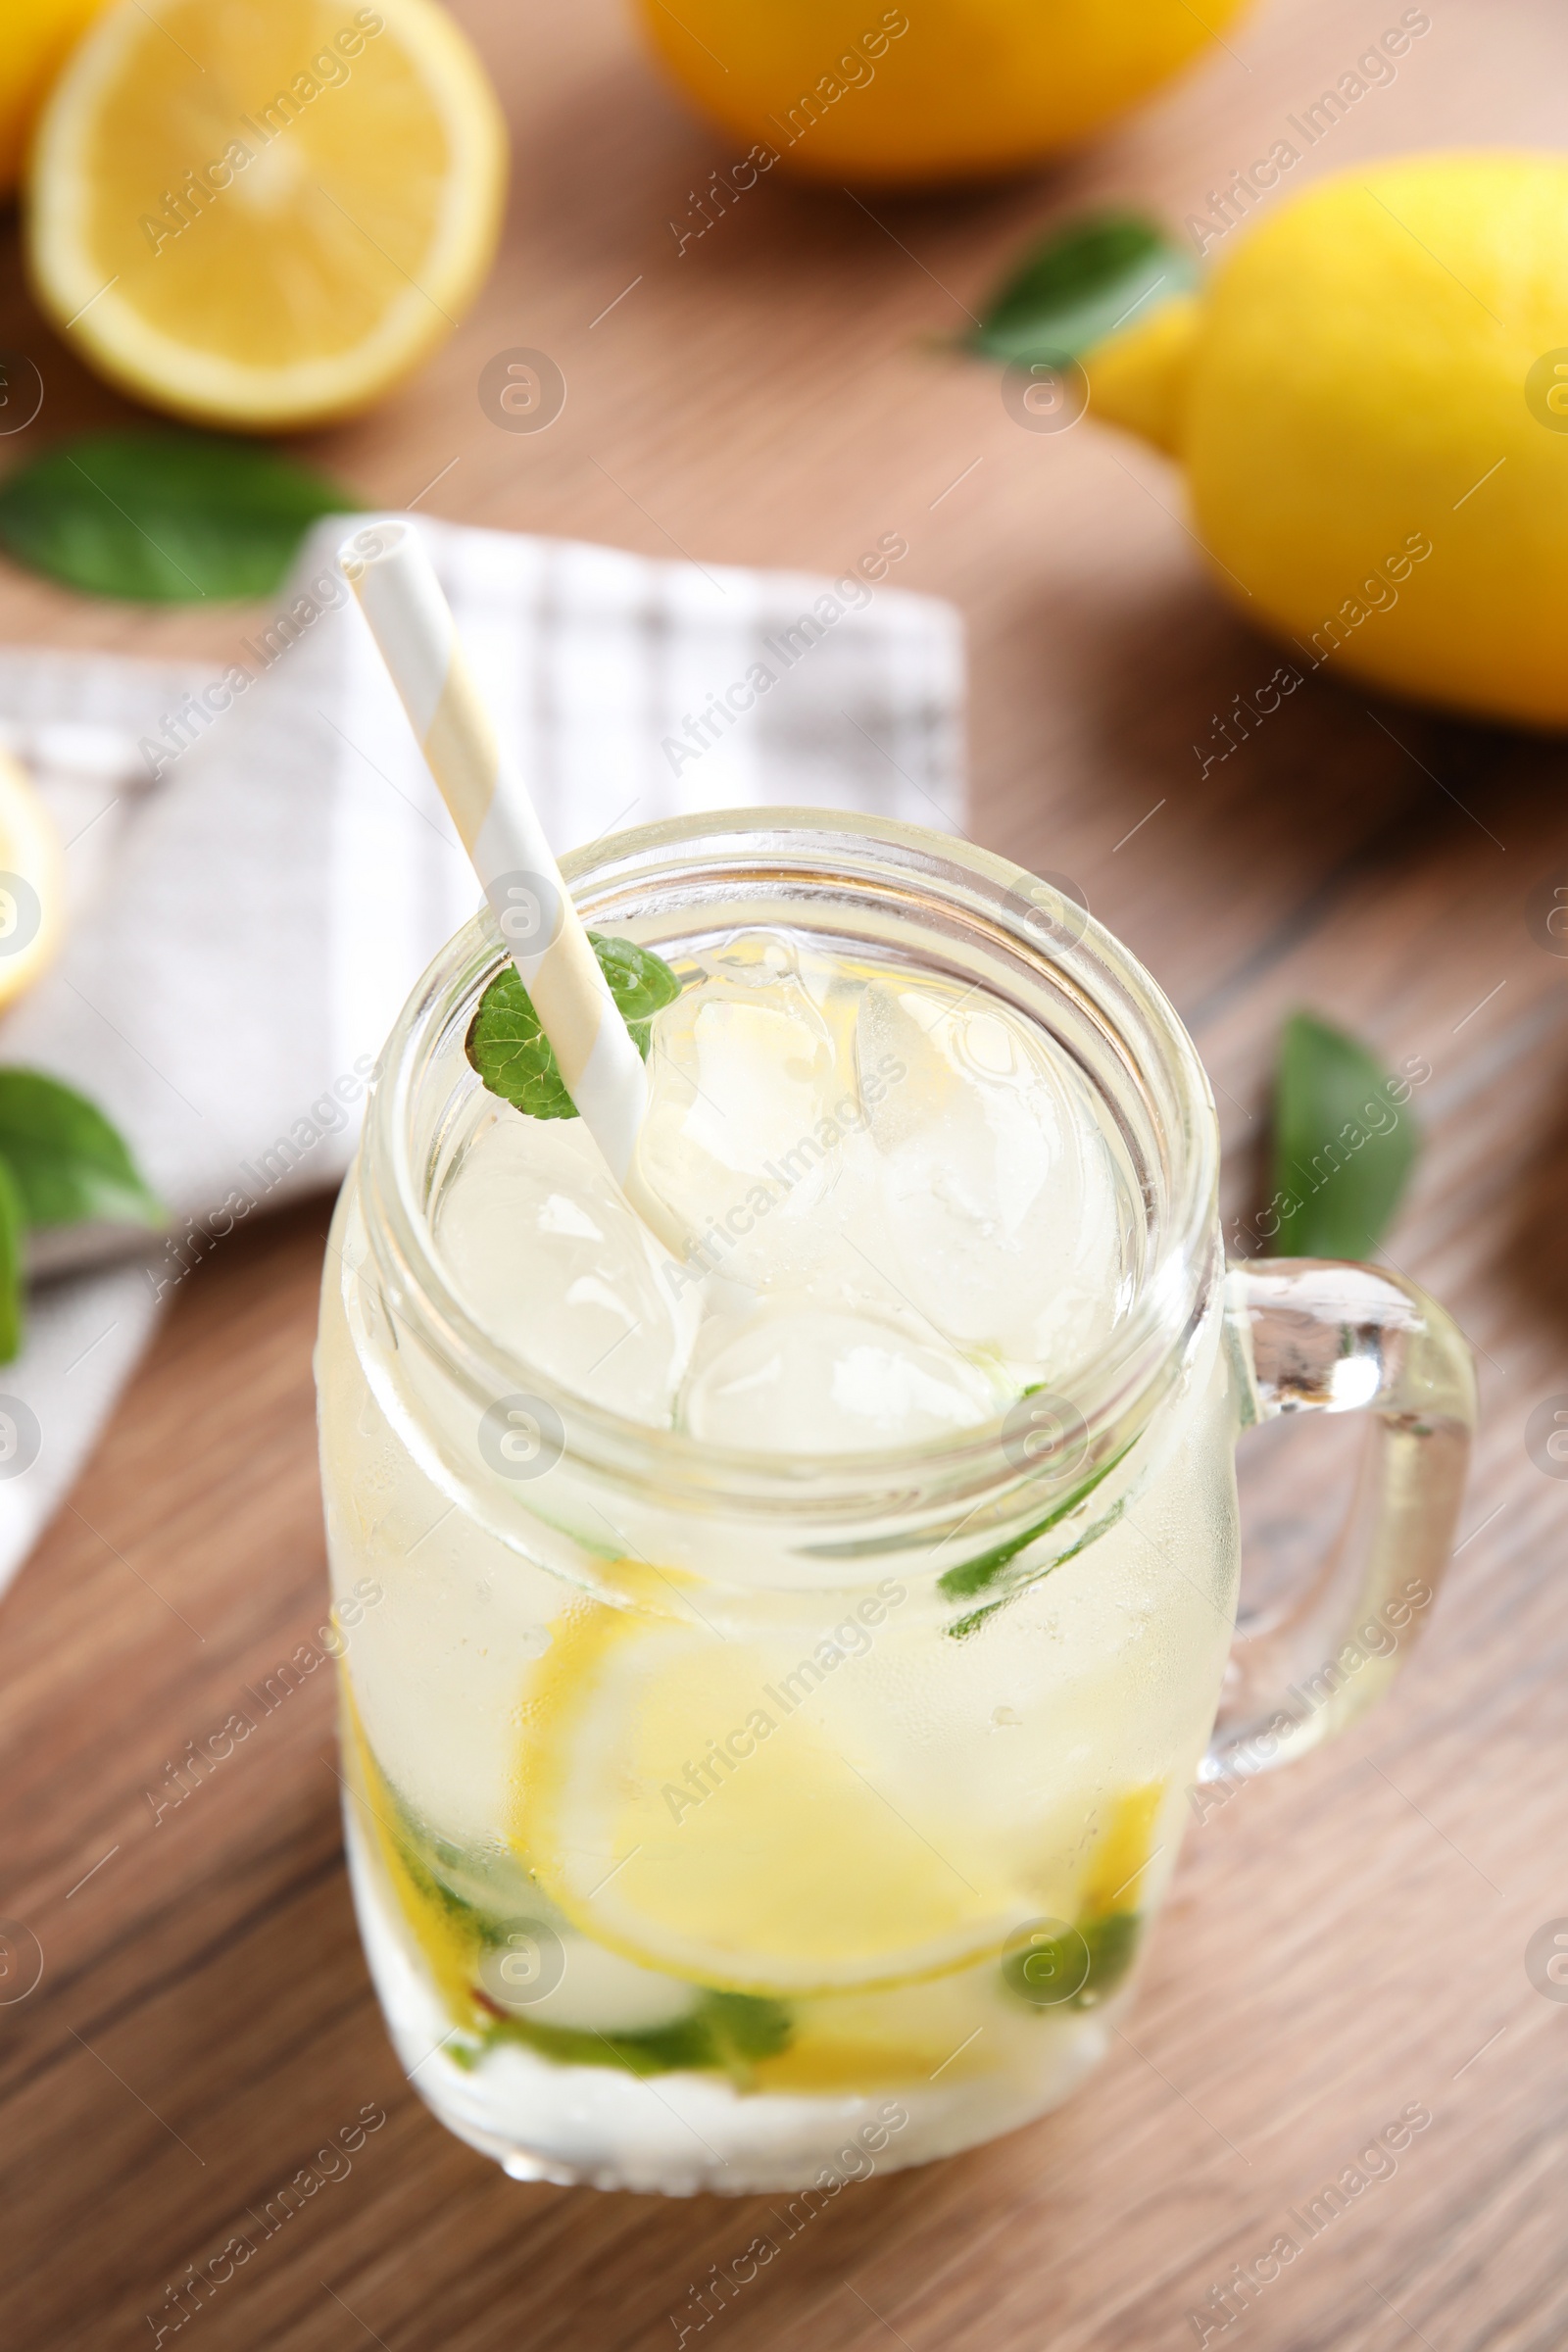 Photo of Mason jar of cold lemonade on wooden table